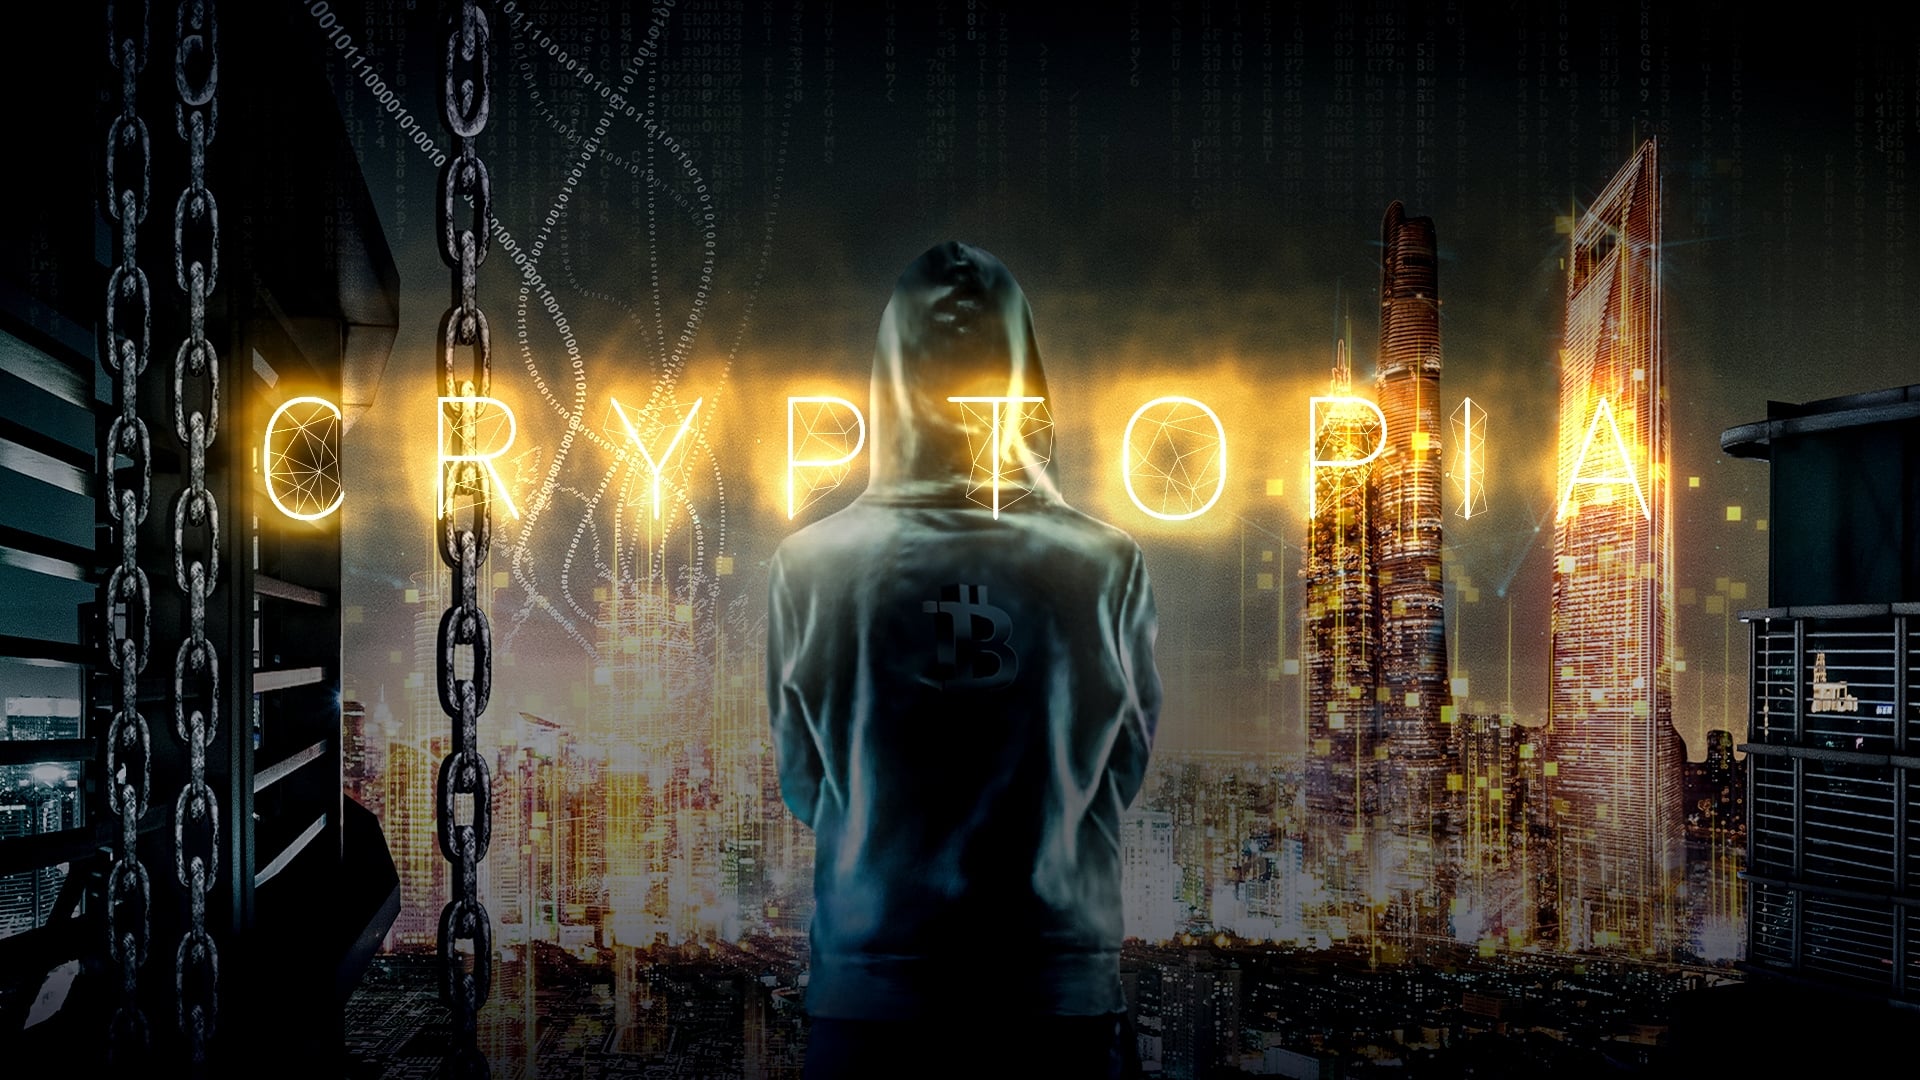 Cryptopia: Bitcoin, Blockchains & the Future of the Internet (2020)